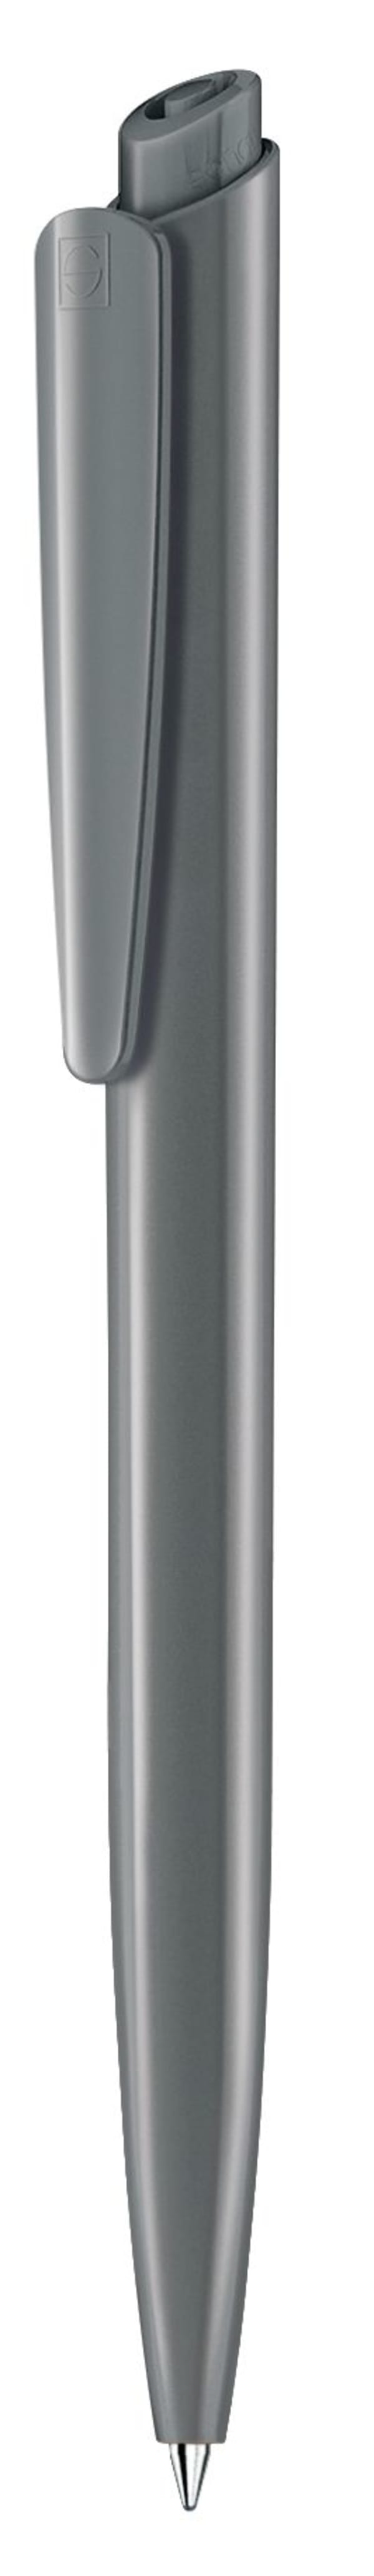 Kugelschreiber-Dart-Polished-blau-dokumentenecht-Grau-Kunststoff-Frontansicht-1